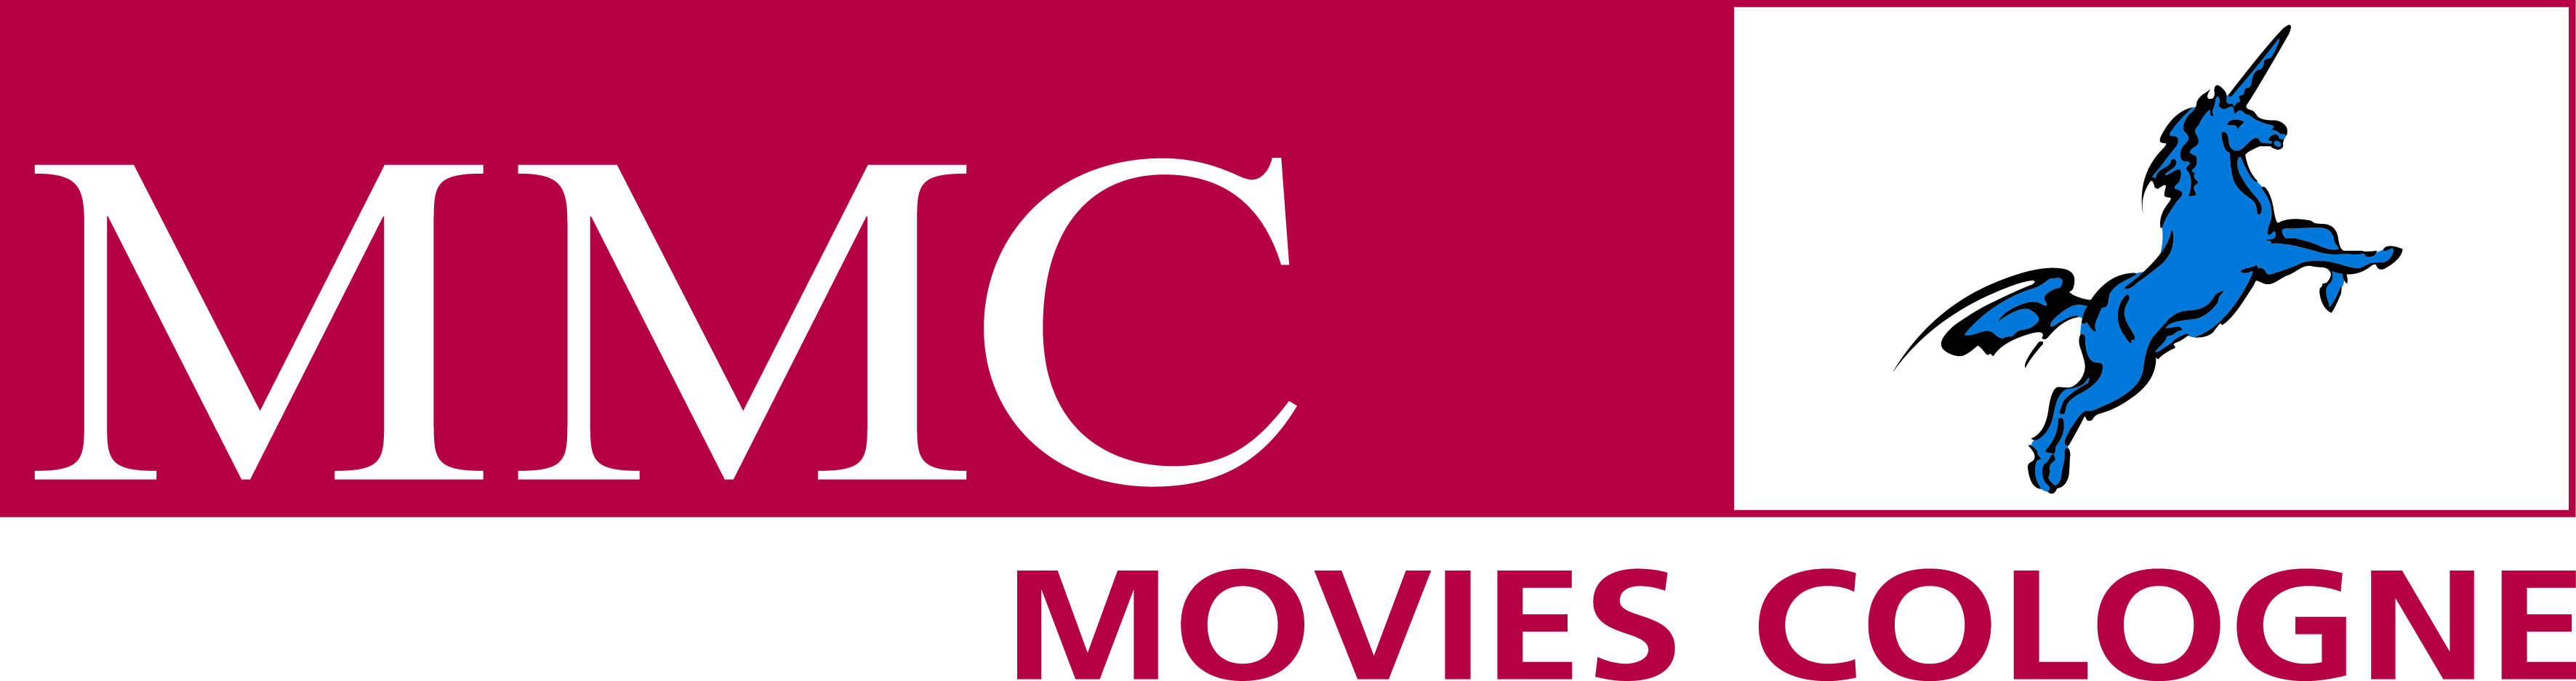 MMC Movies Cologne